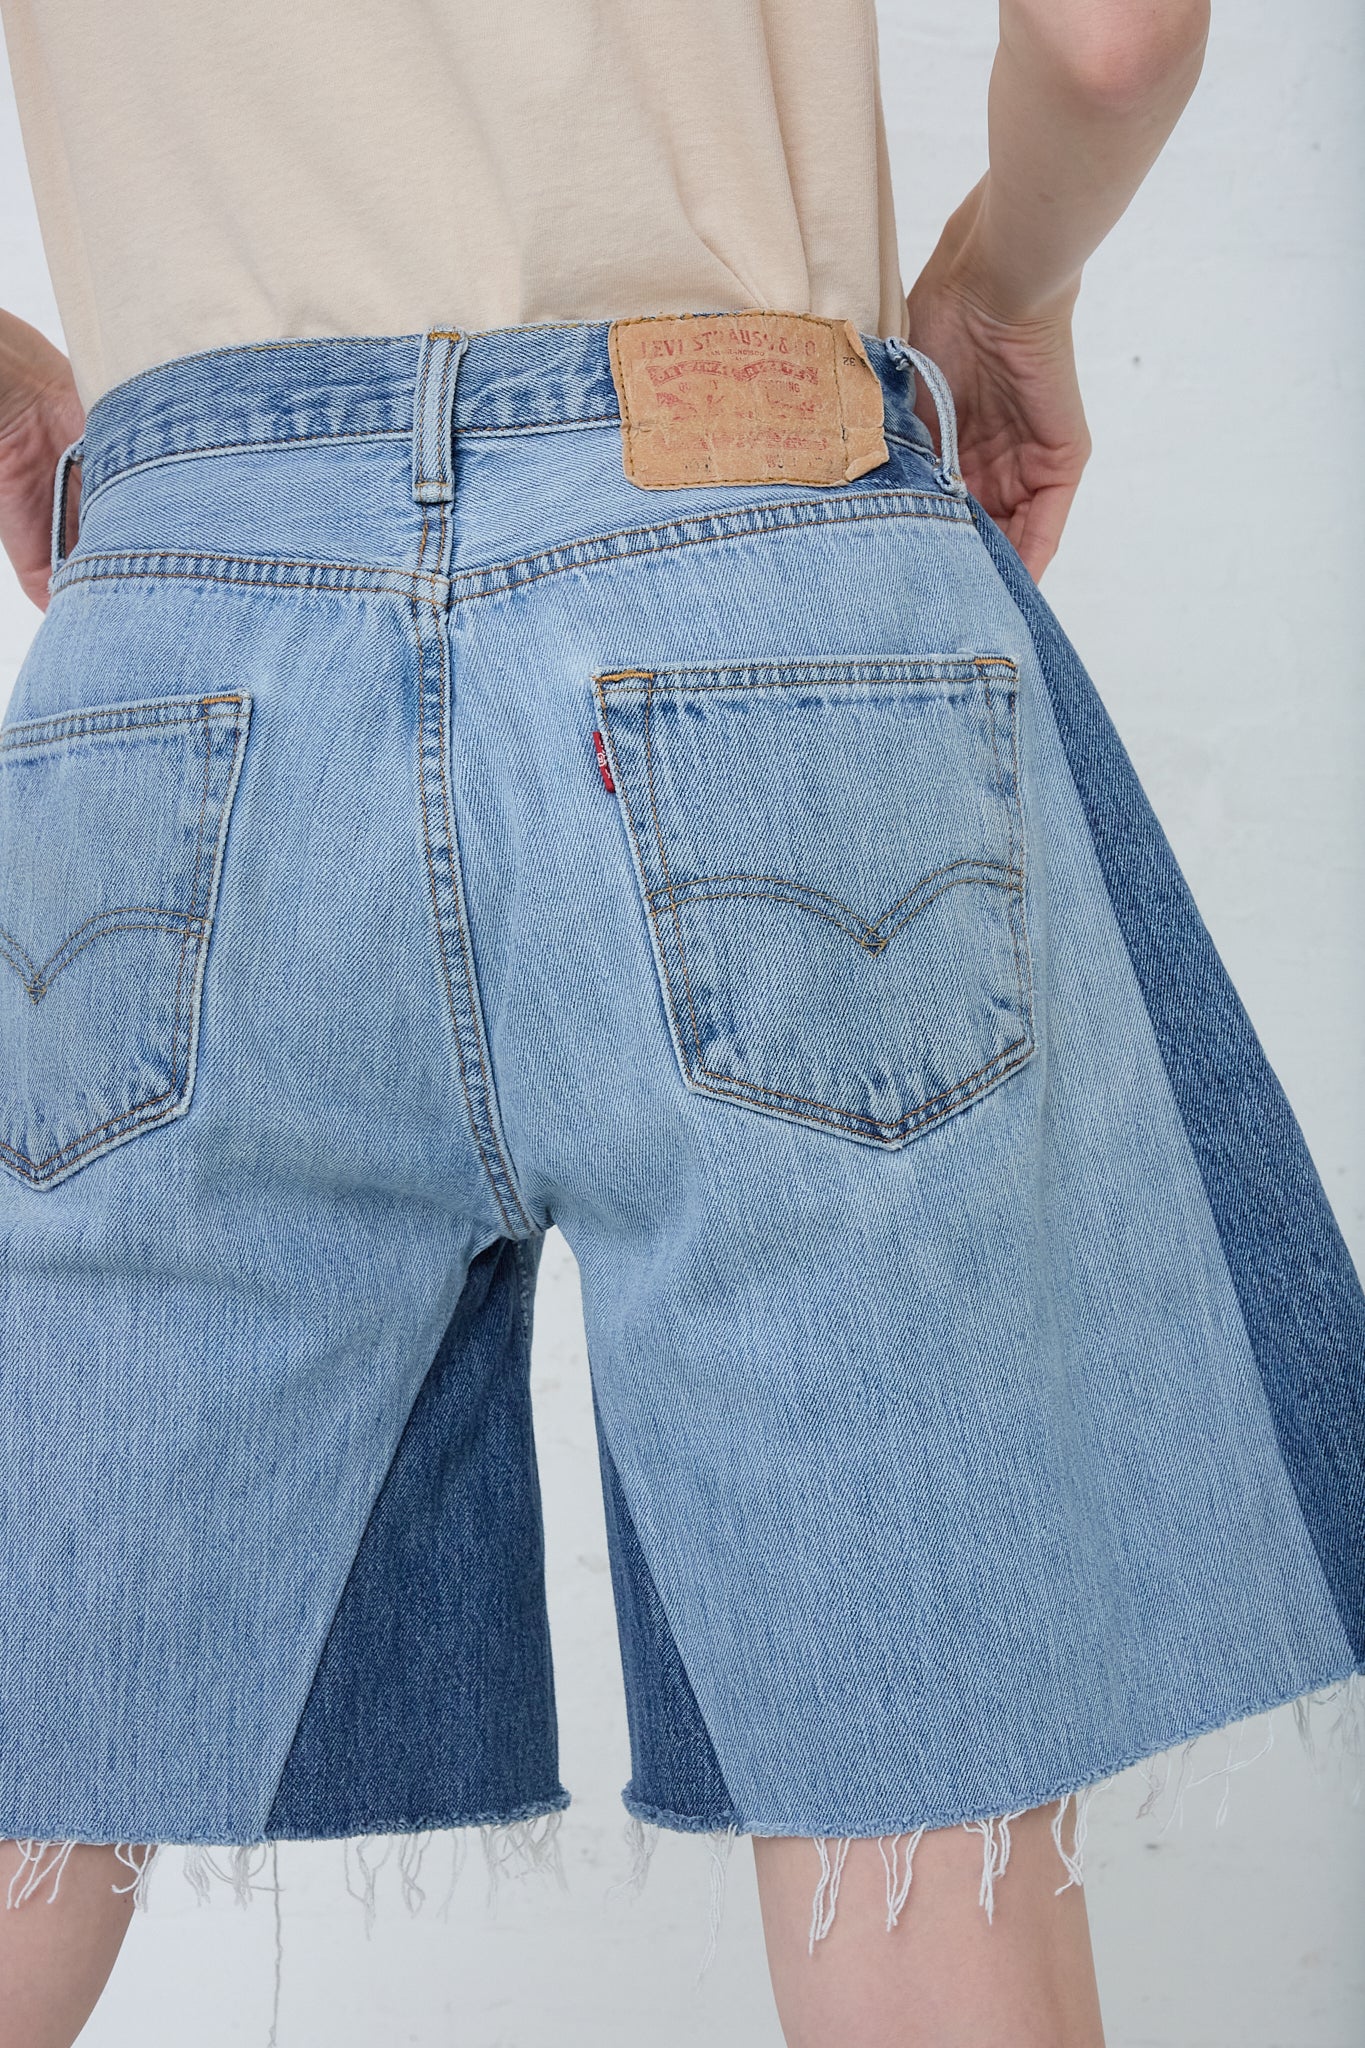 A woman is wearing B Sides Lasso Short in Vintage Indigo denim cutoff shorts. Back view.